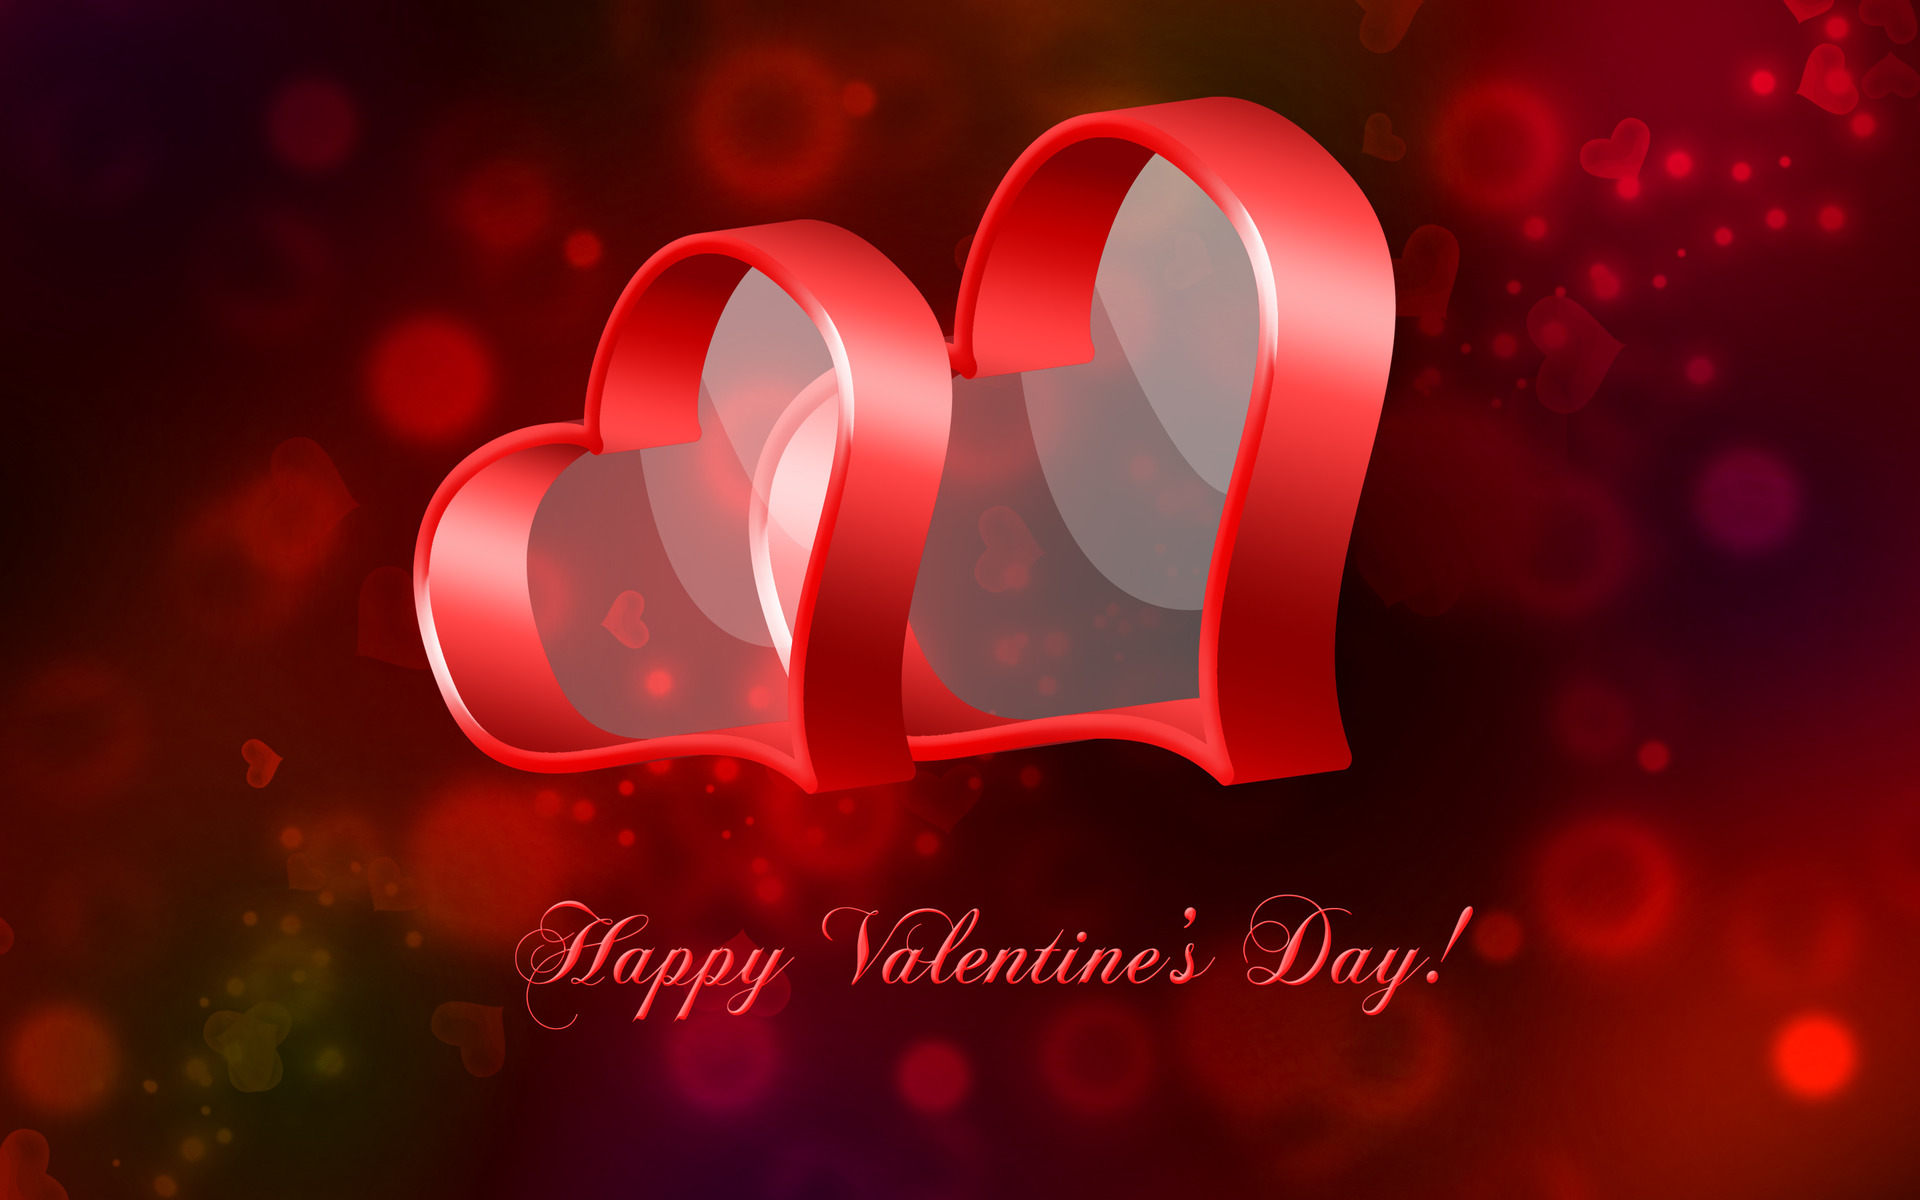 Happy Valentine Day Image Download - HD Wallpaper 